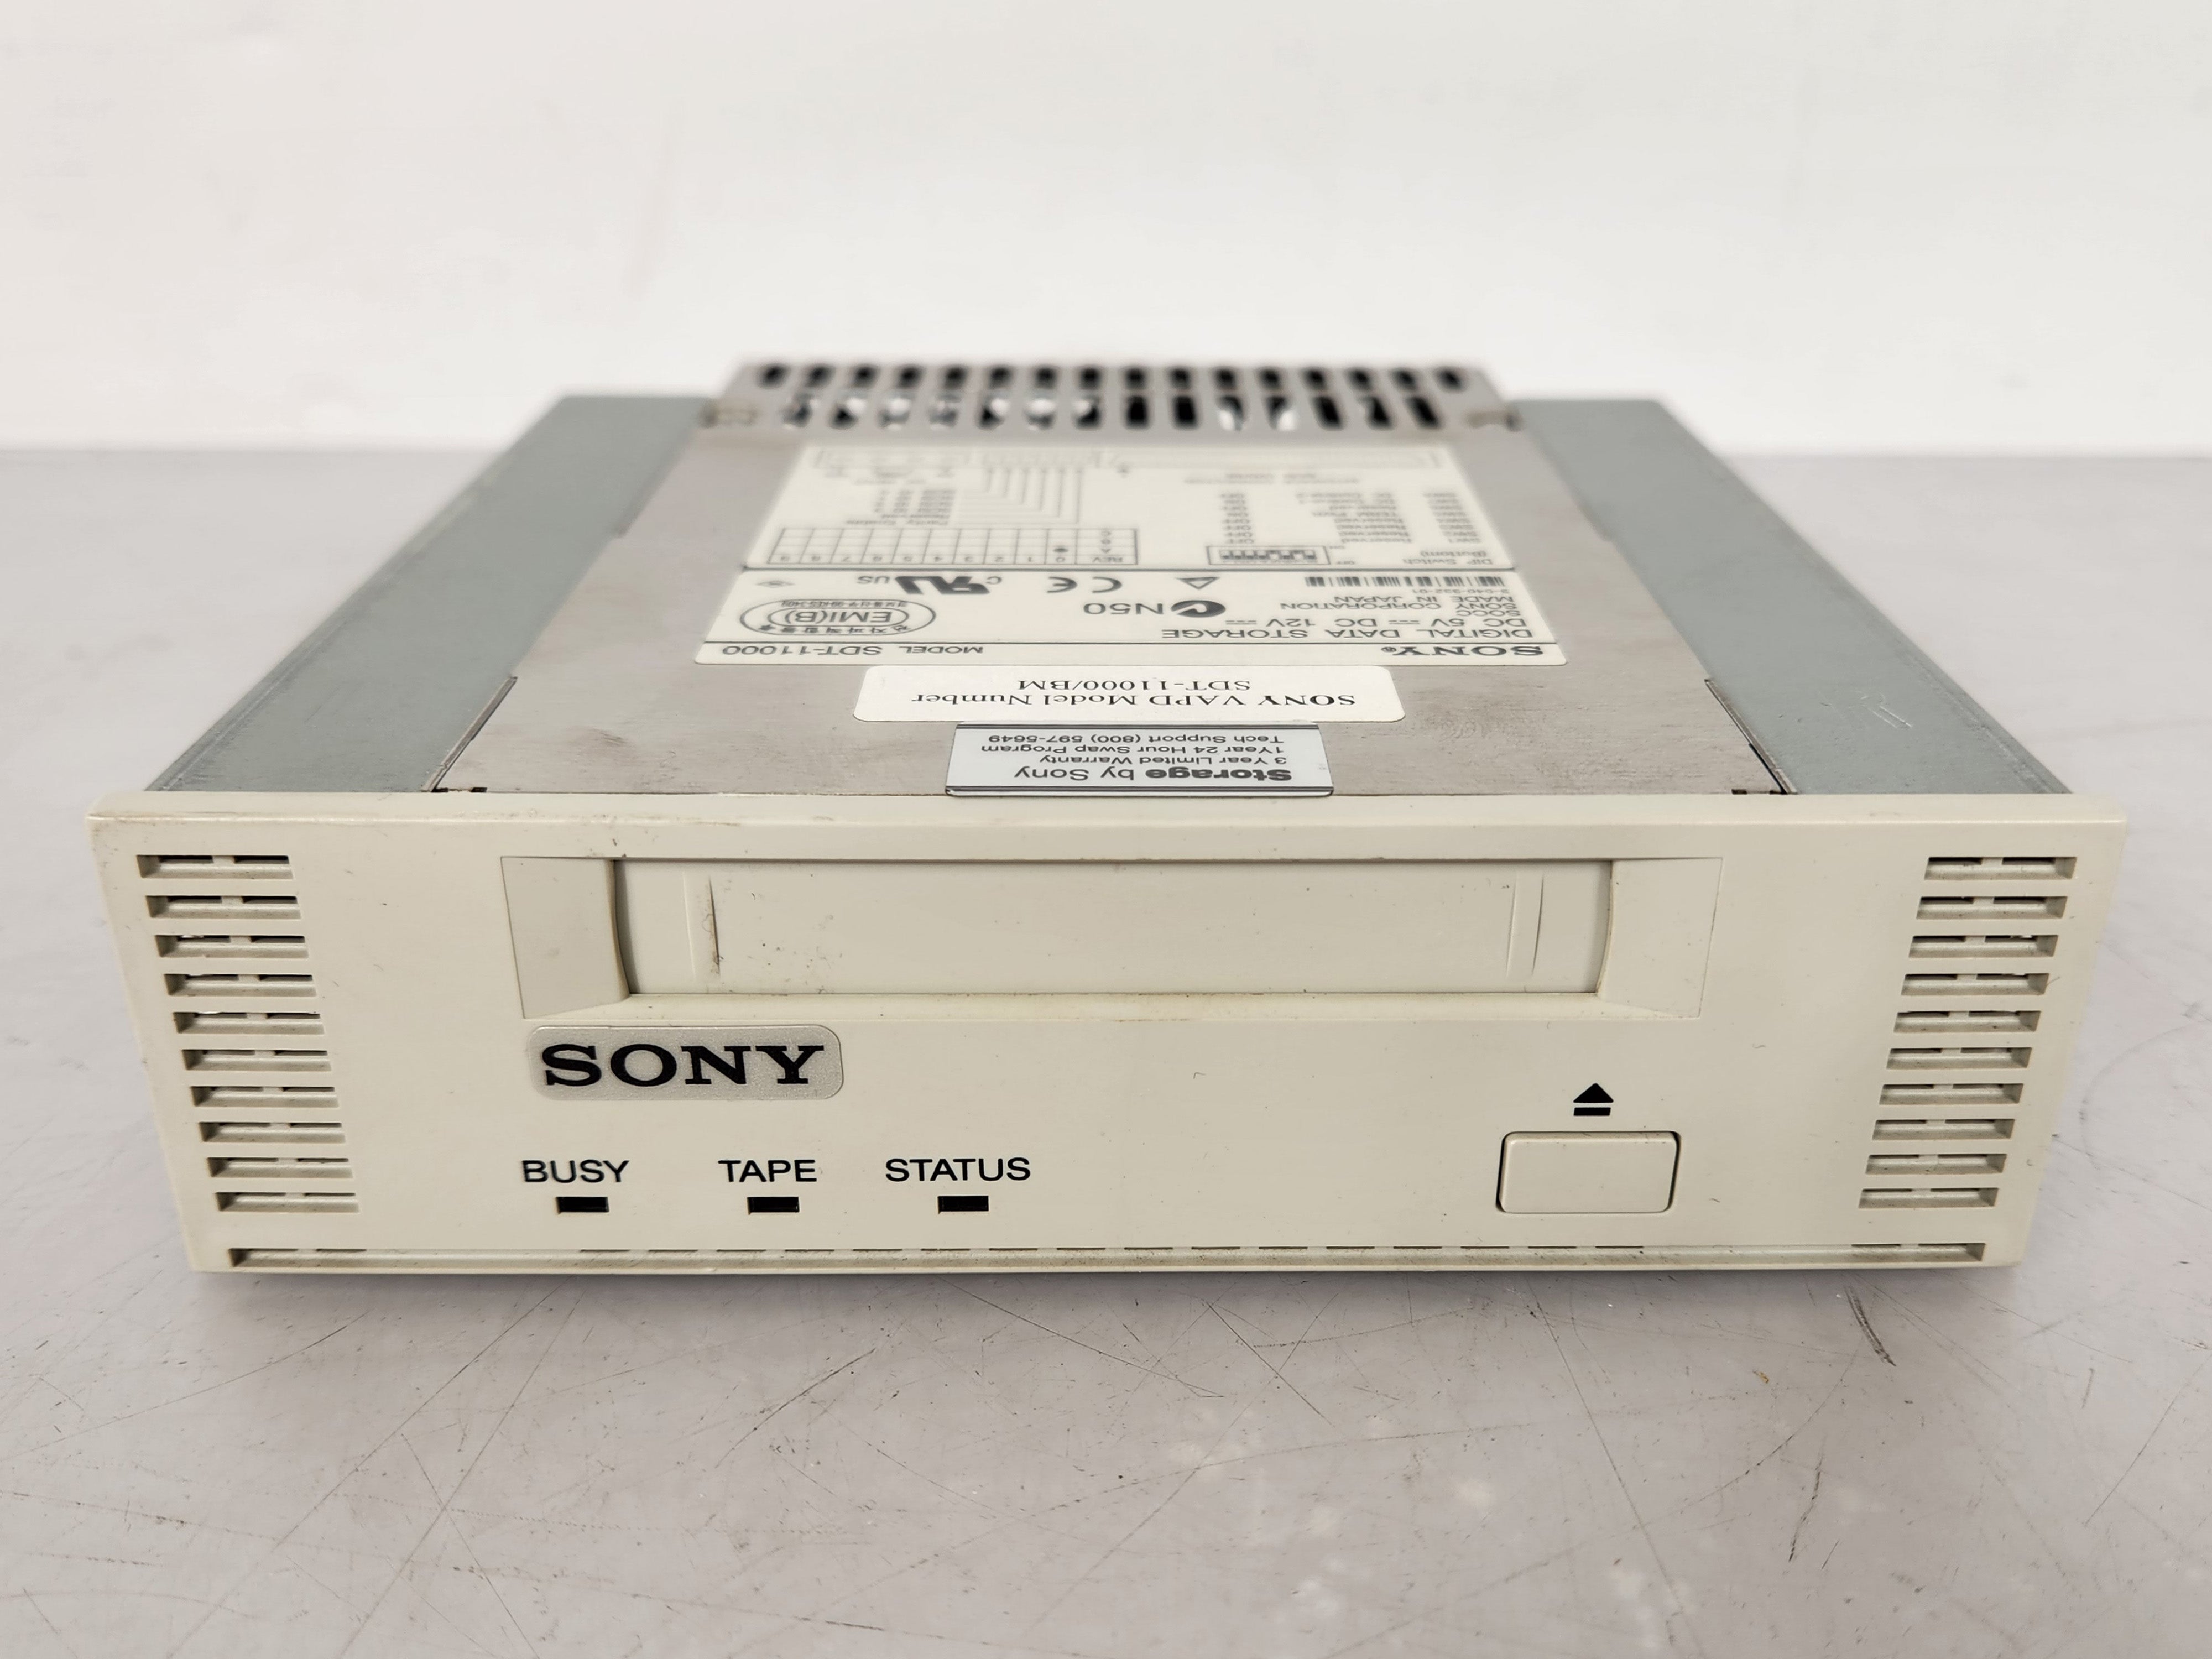 Sony Digital Data Storage SDT-11000